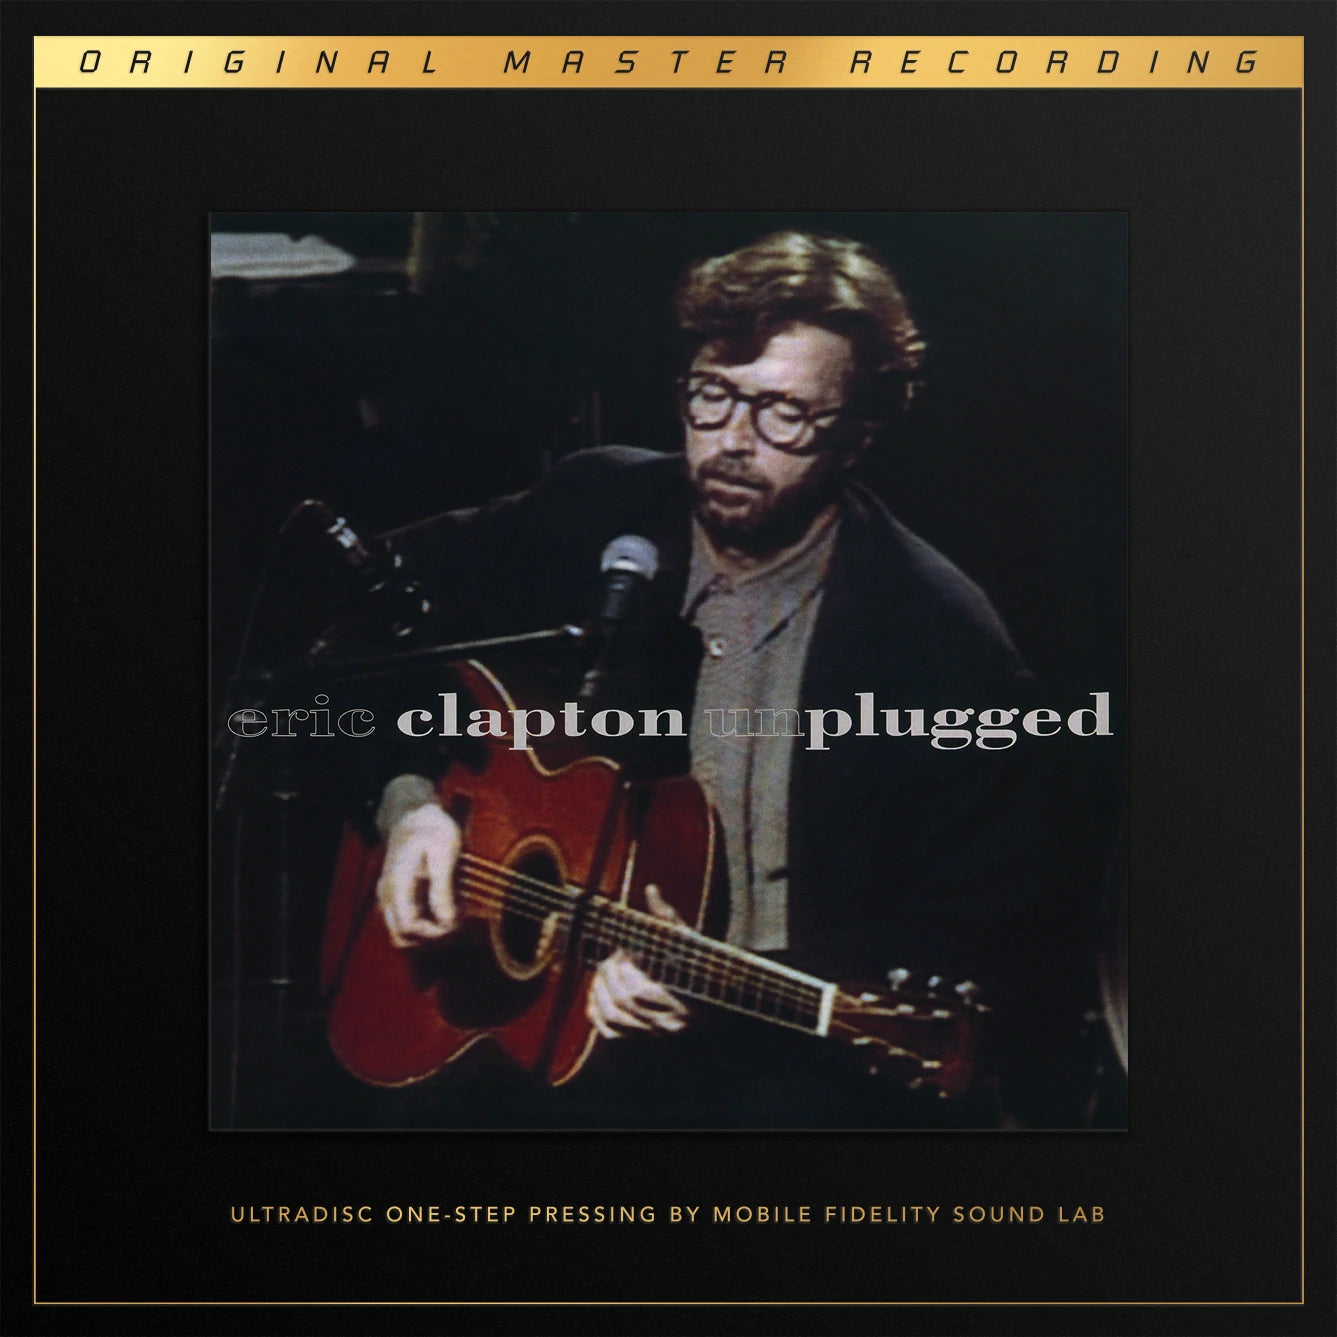 Eric Clapton - "Unplugged" MoFi One-Step